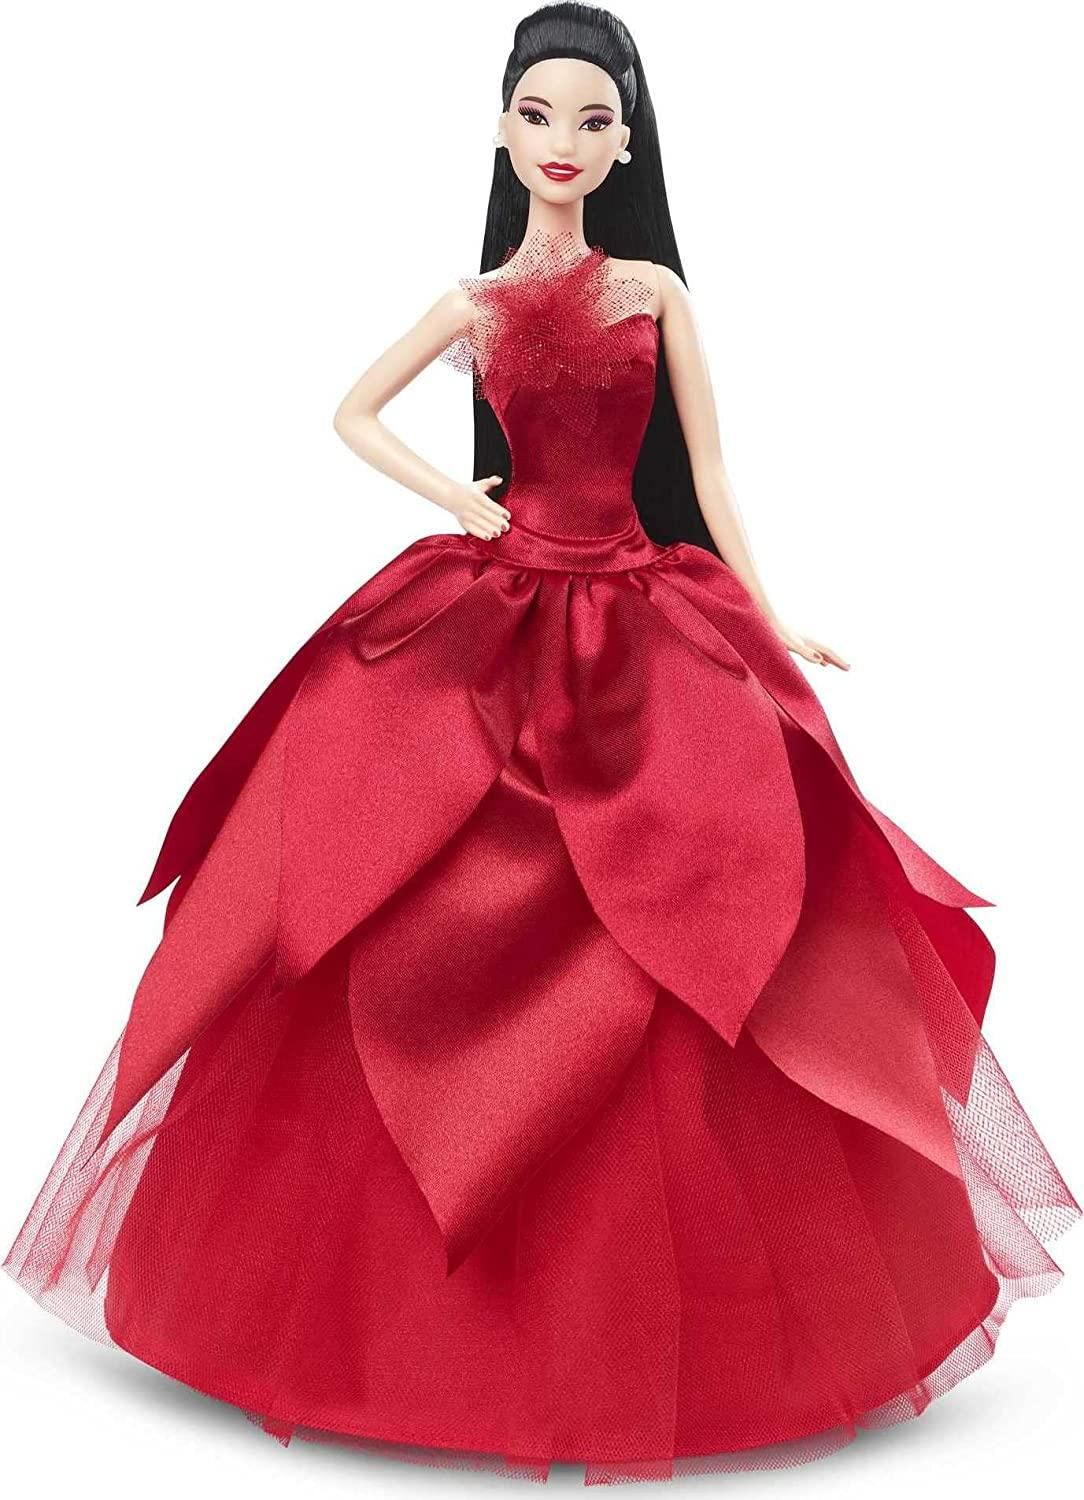 Barbie celebrates 65th birthday in original style